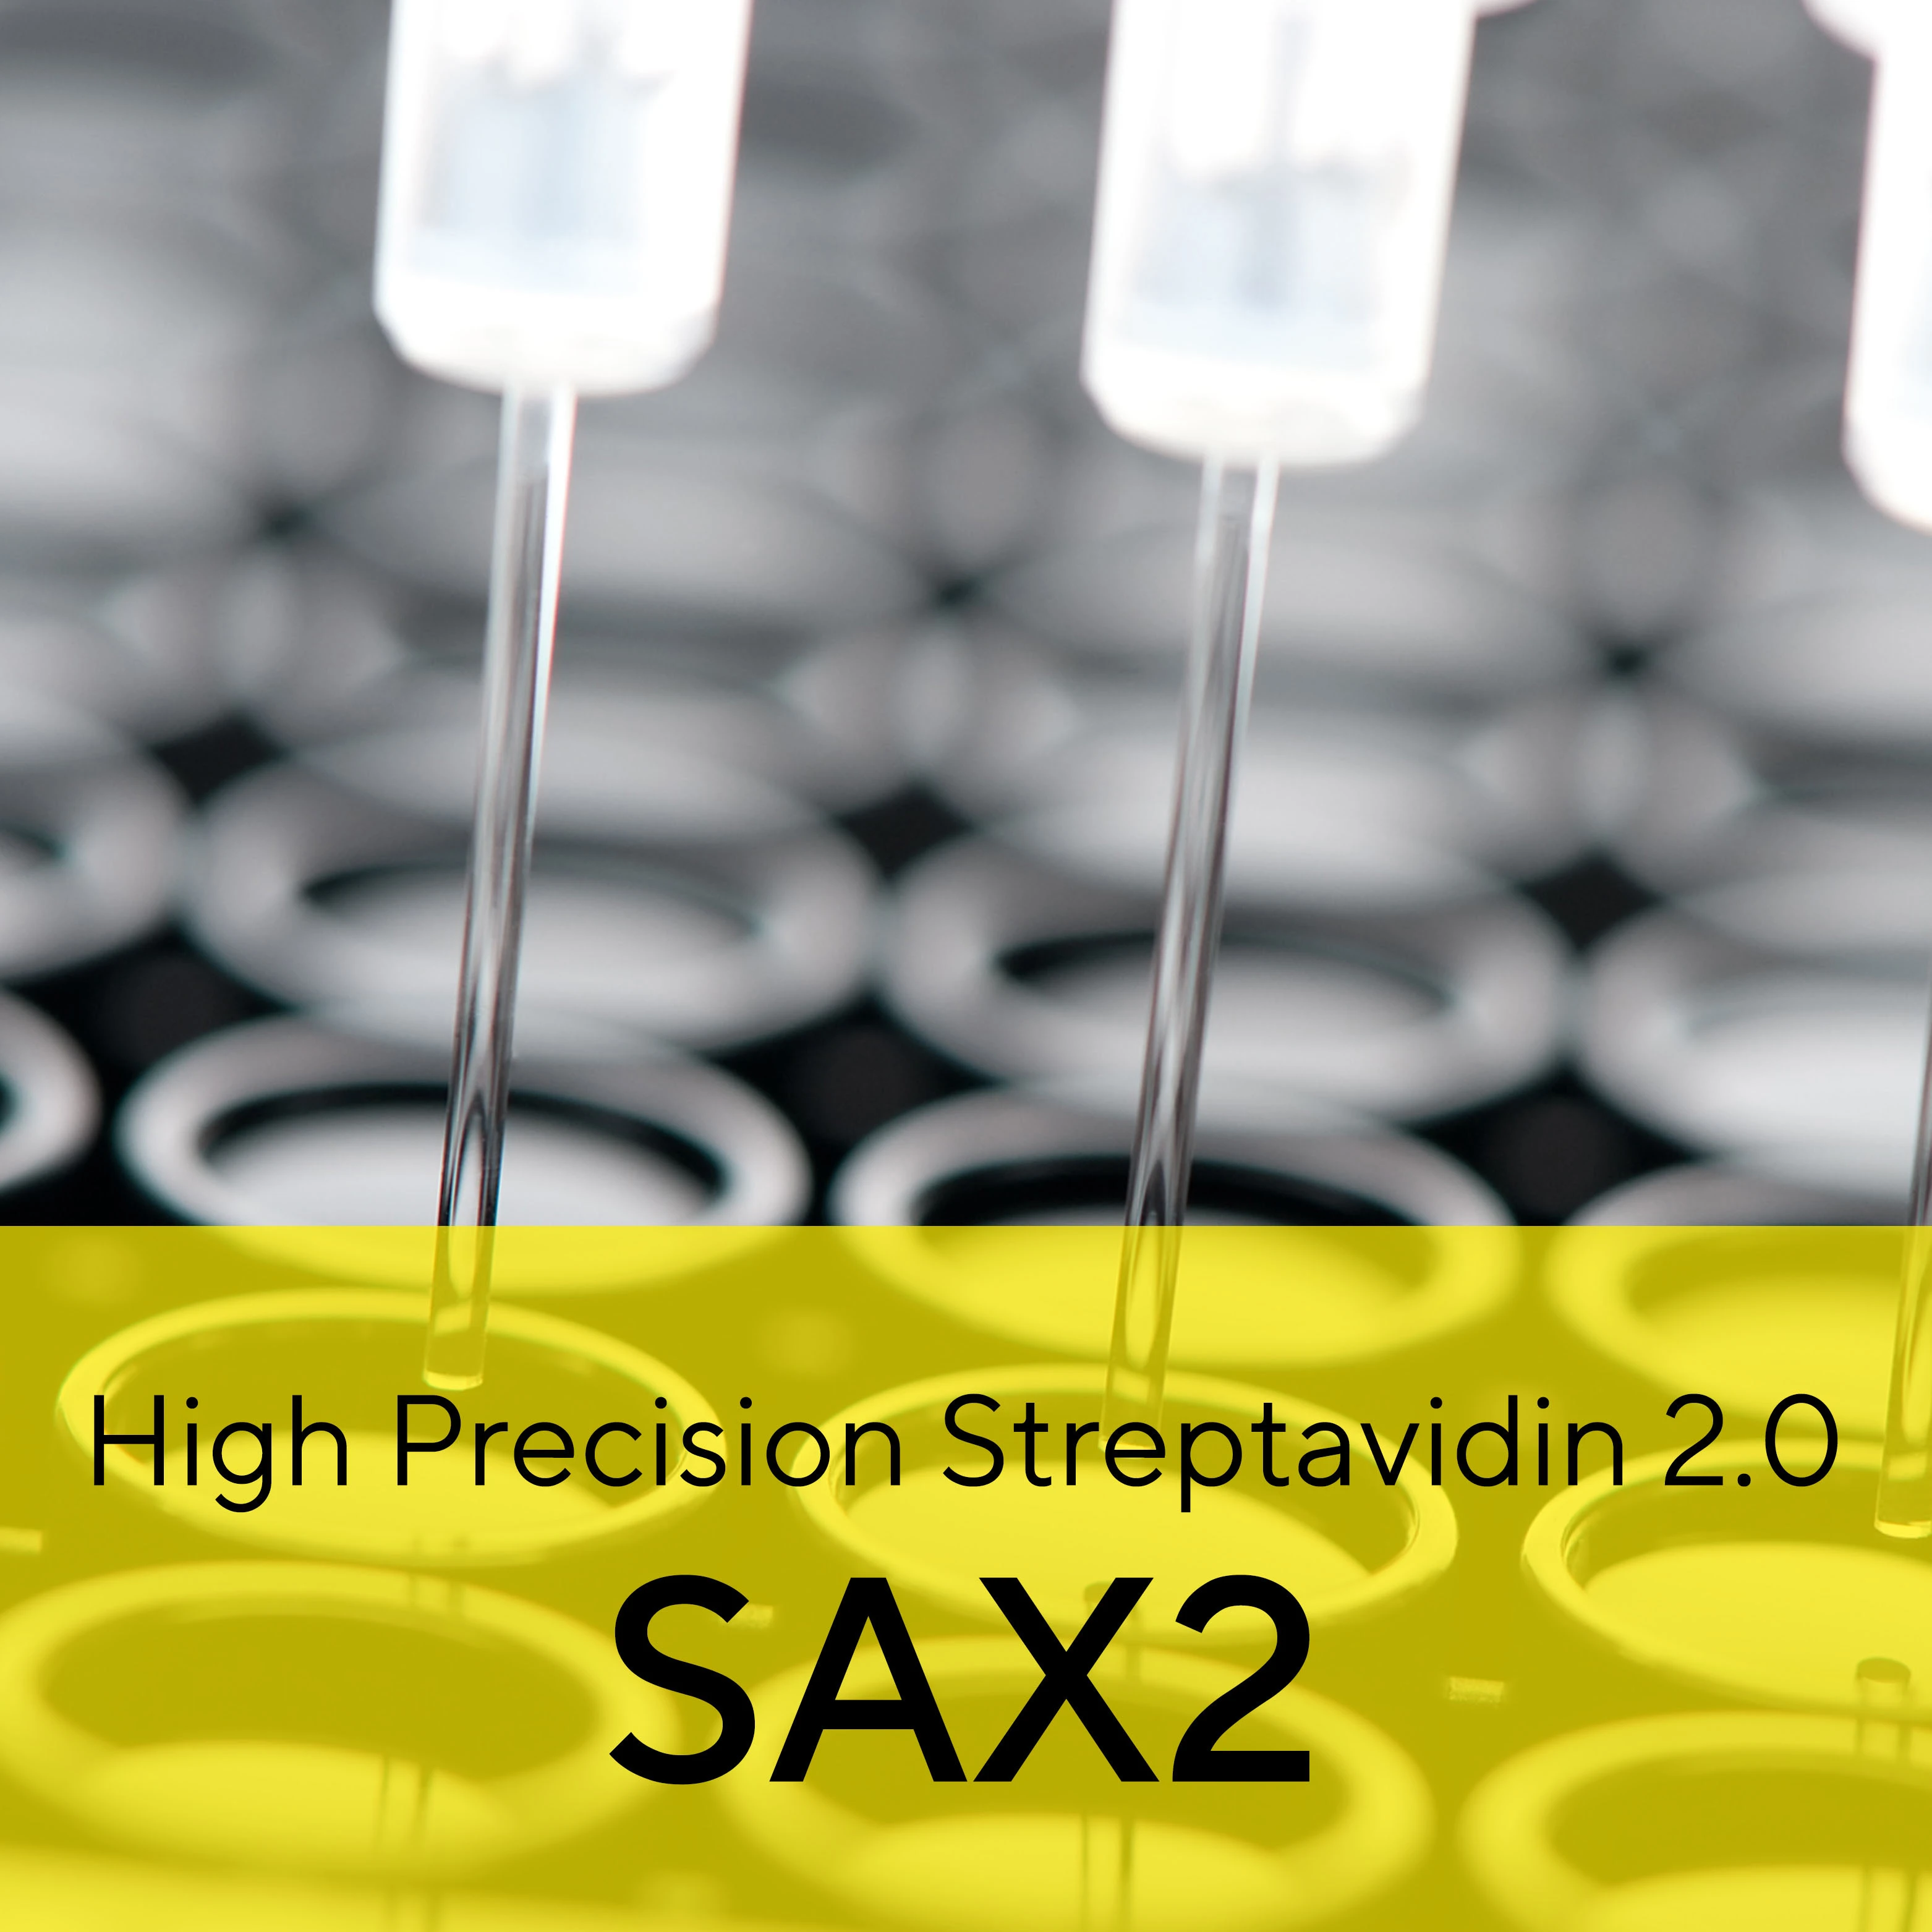 High Precision Streptavidin 2.0 (SAX2) Biosensors